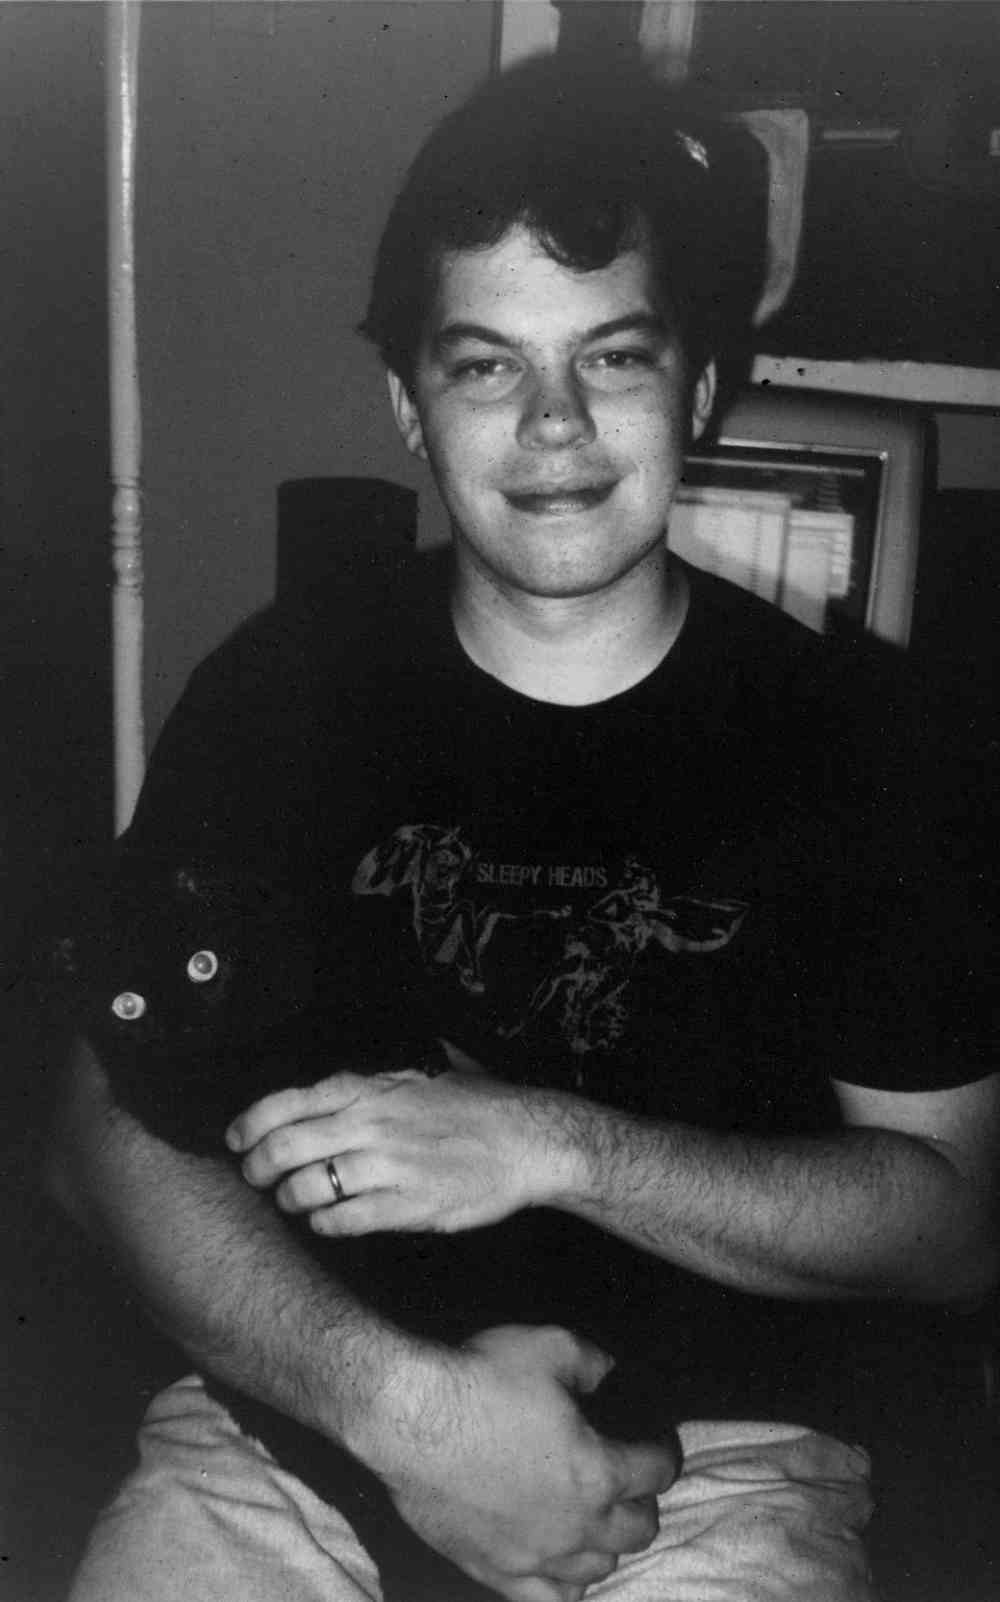 David Rhoden in Sleepy Heads T-Shirt, holding Betty, early 2000s